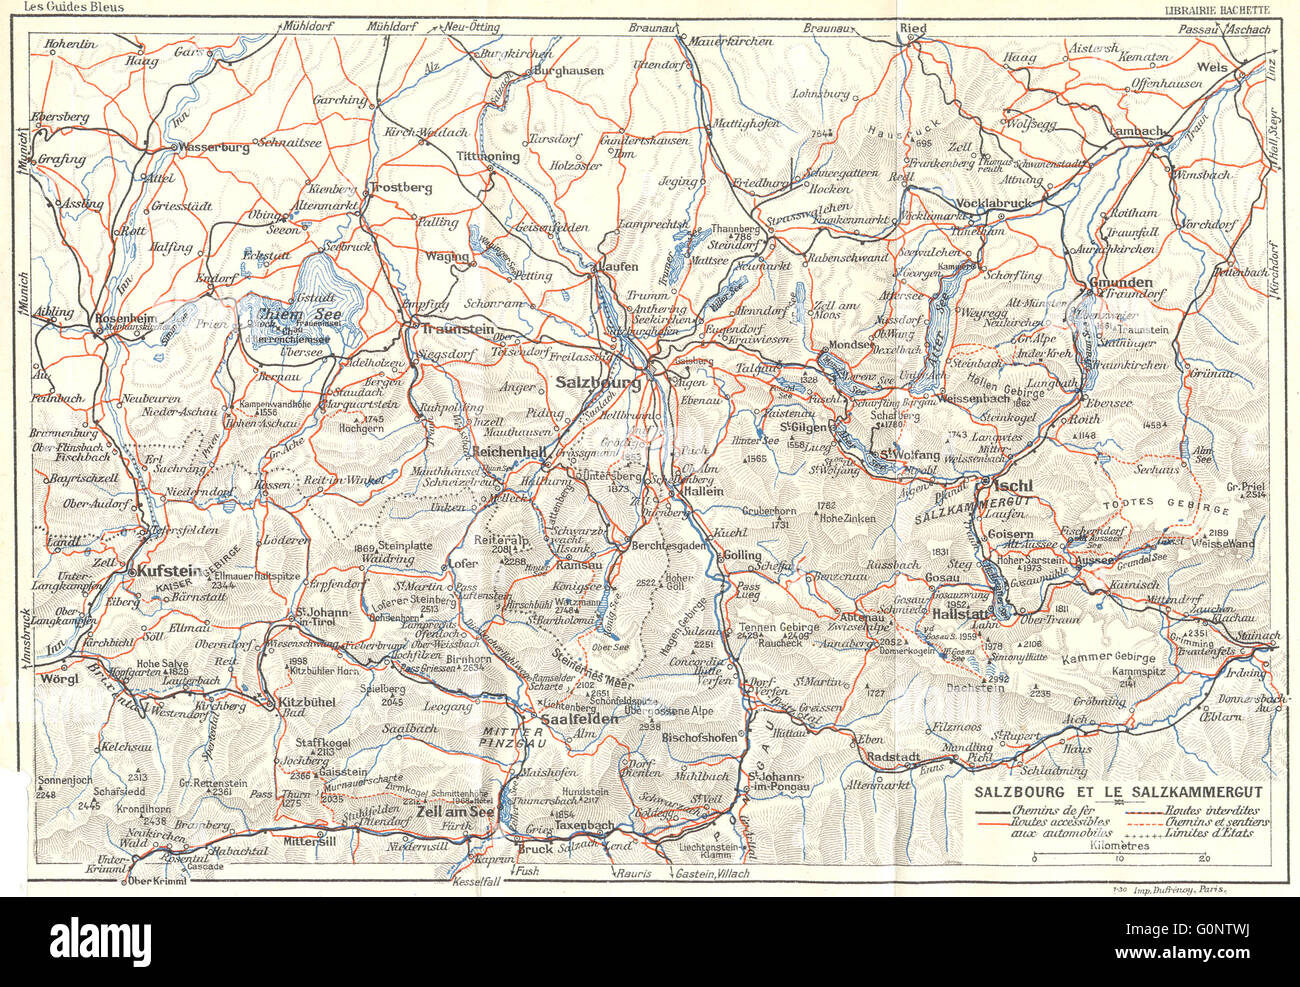 Austria: Salzburg Salzkammergut, 1914 Antique Map Stock Photo - Alamy